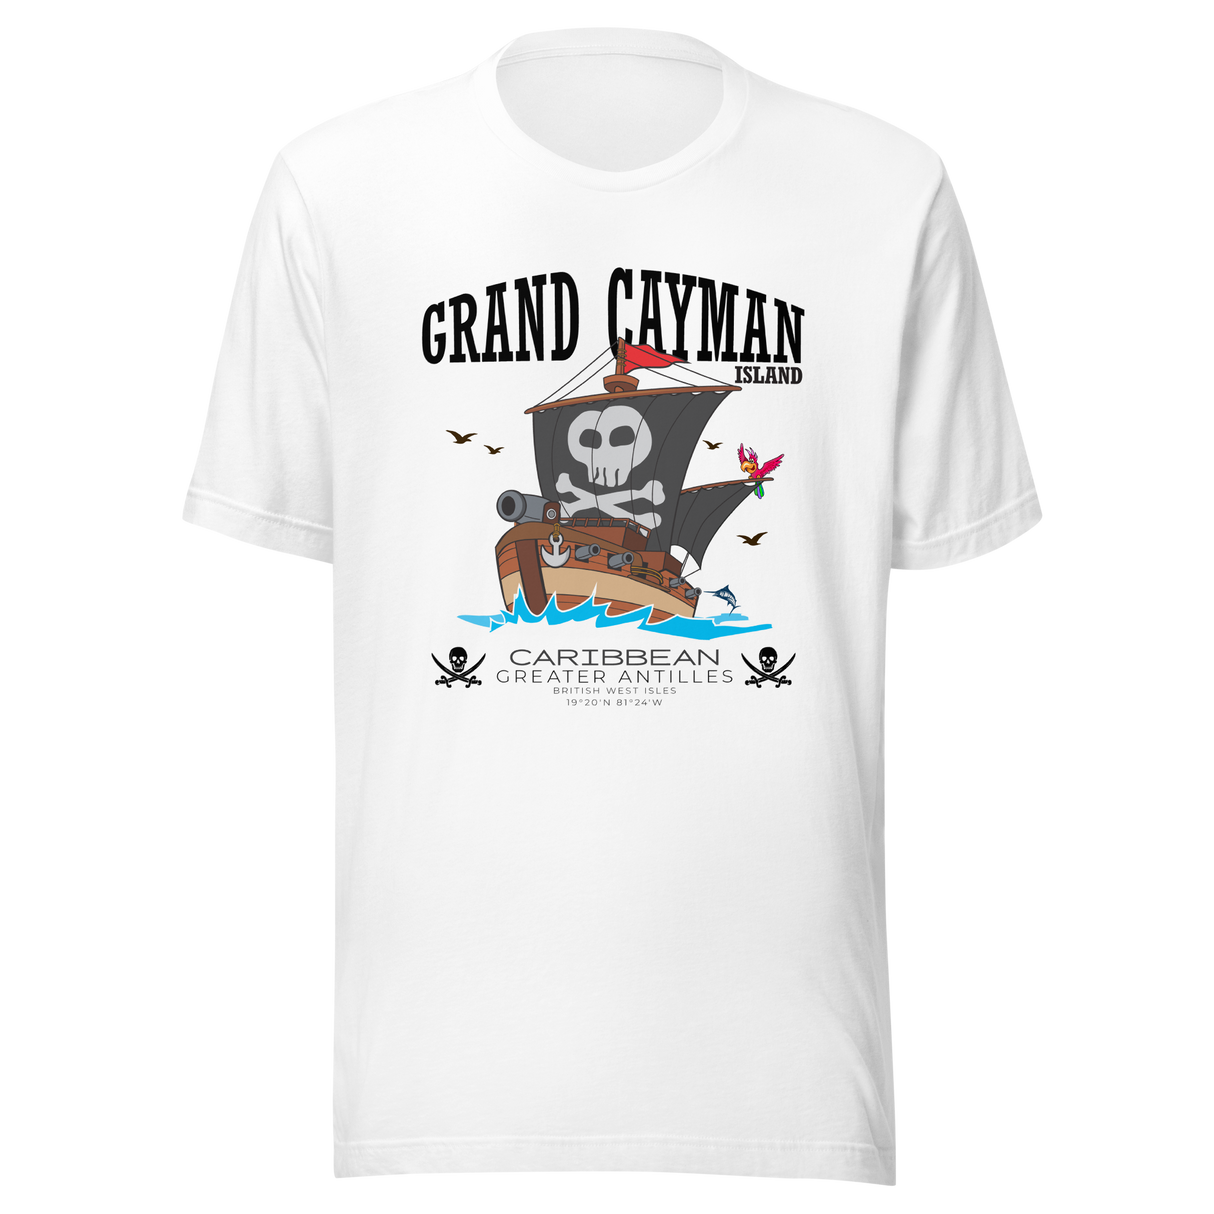 grand-cayman-island-grand-cayman-tee-cayman-islands-t-shirt-island-tee-beach-t-shirt-travel-tee#color_white